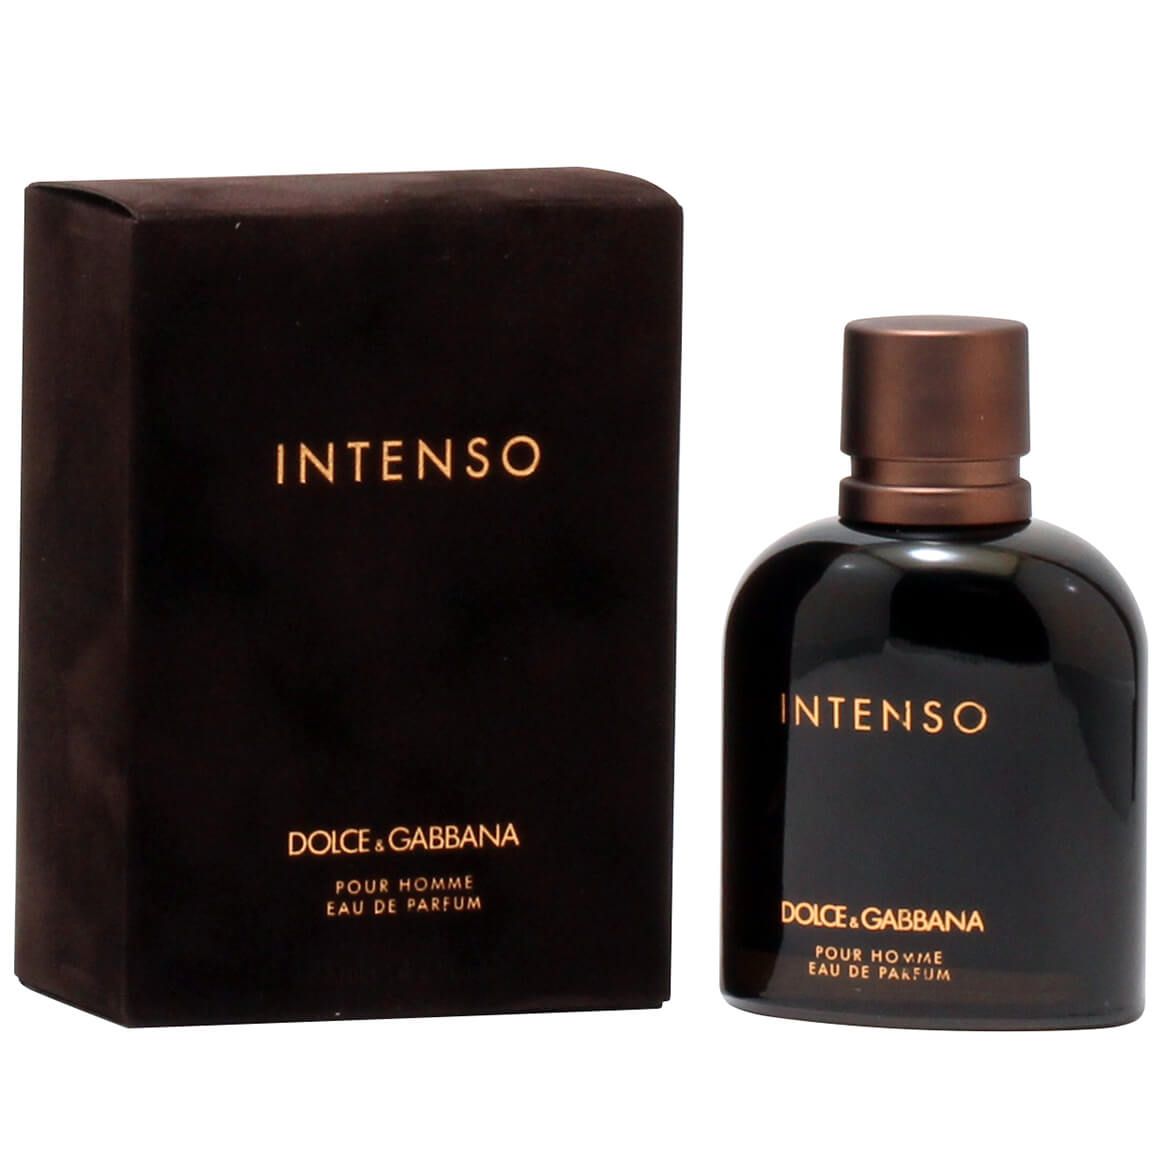 Dolce & Gabbana Intenso for Men EDP, 4.2 fl. oz. + '-' + 377141